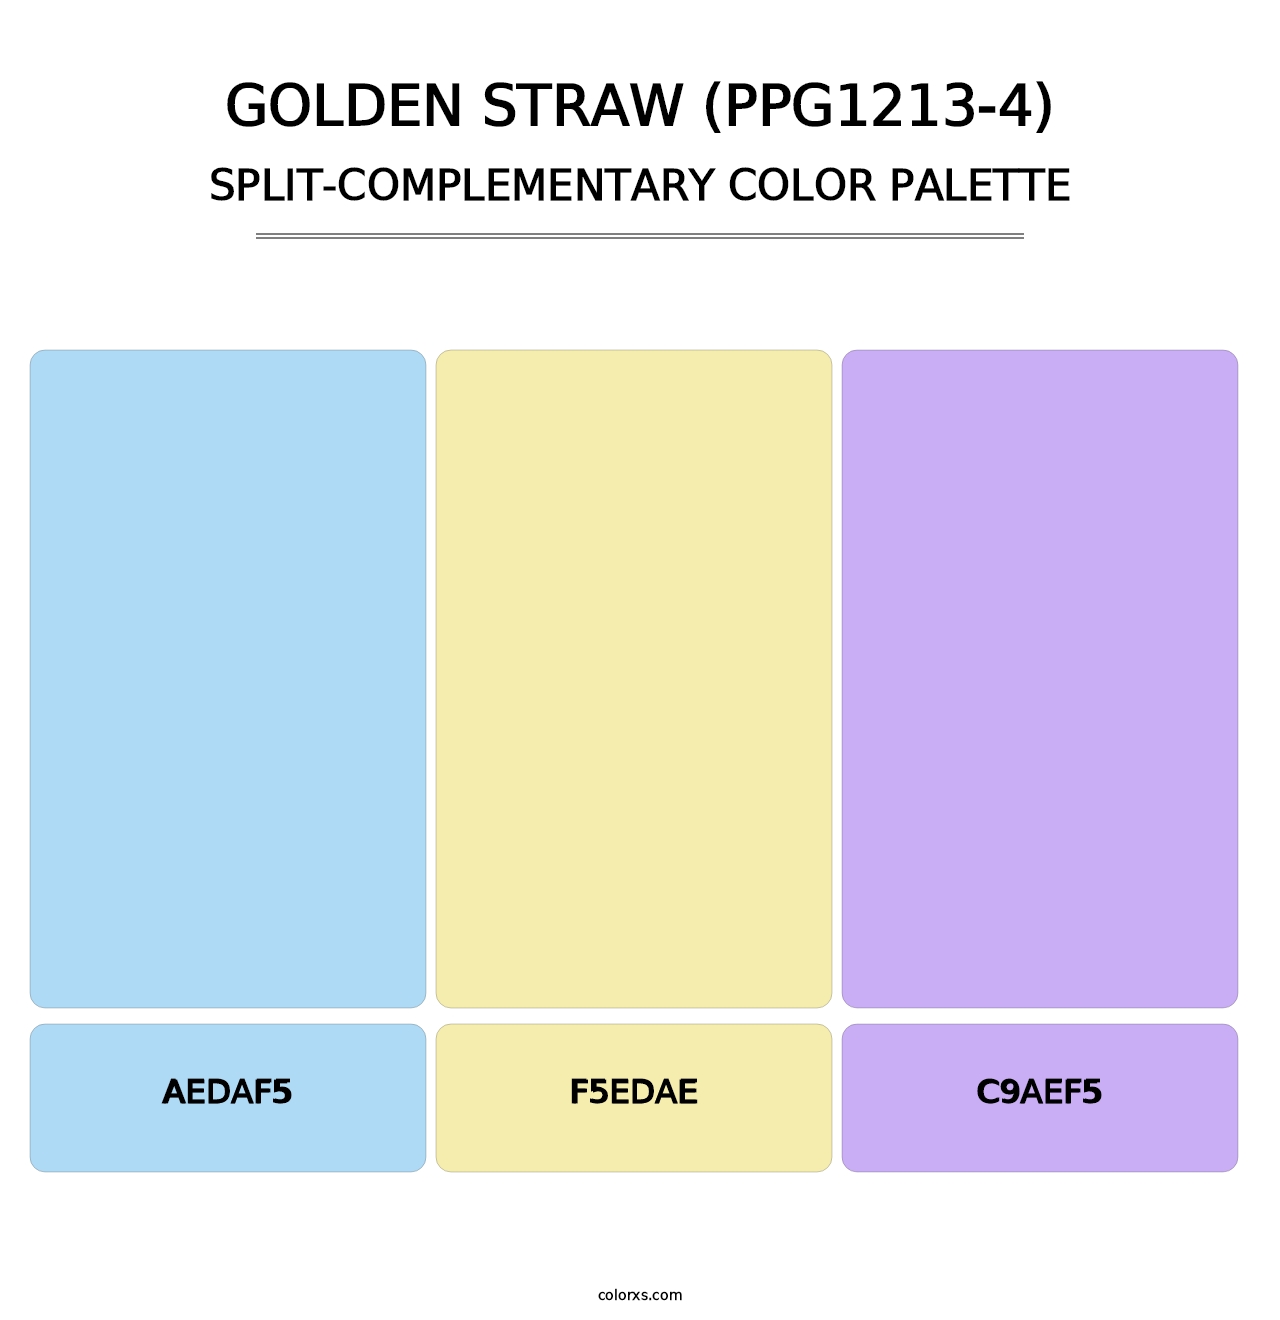 Golden Straw (PPG1213-4) - Split-Complementary Color Palette